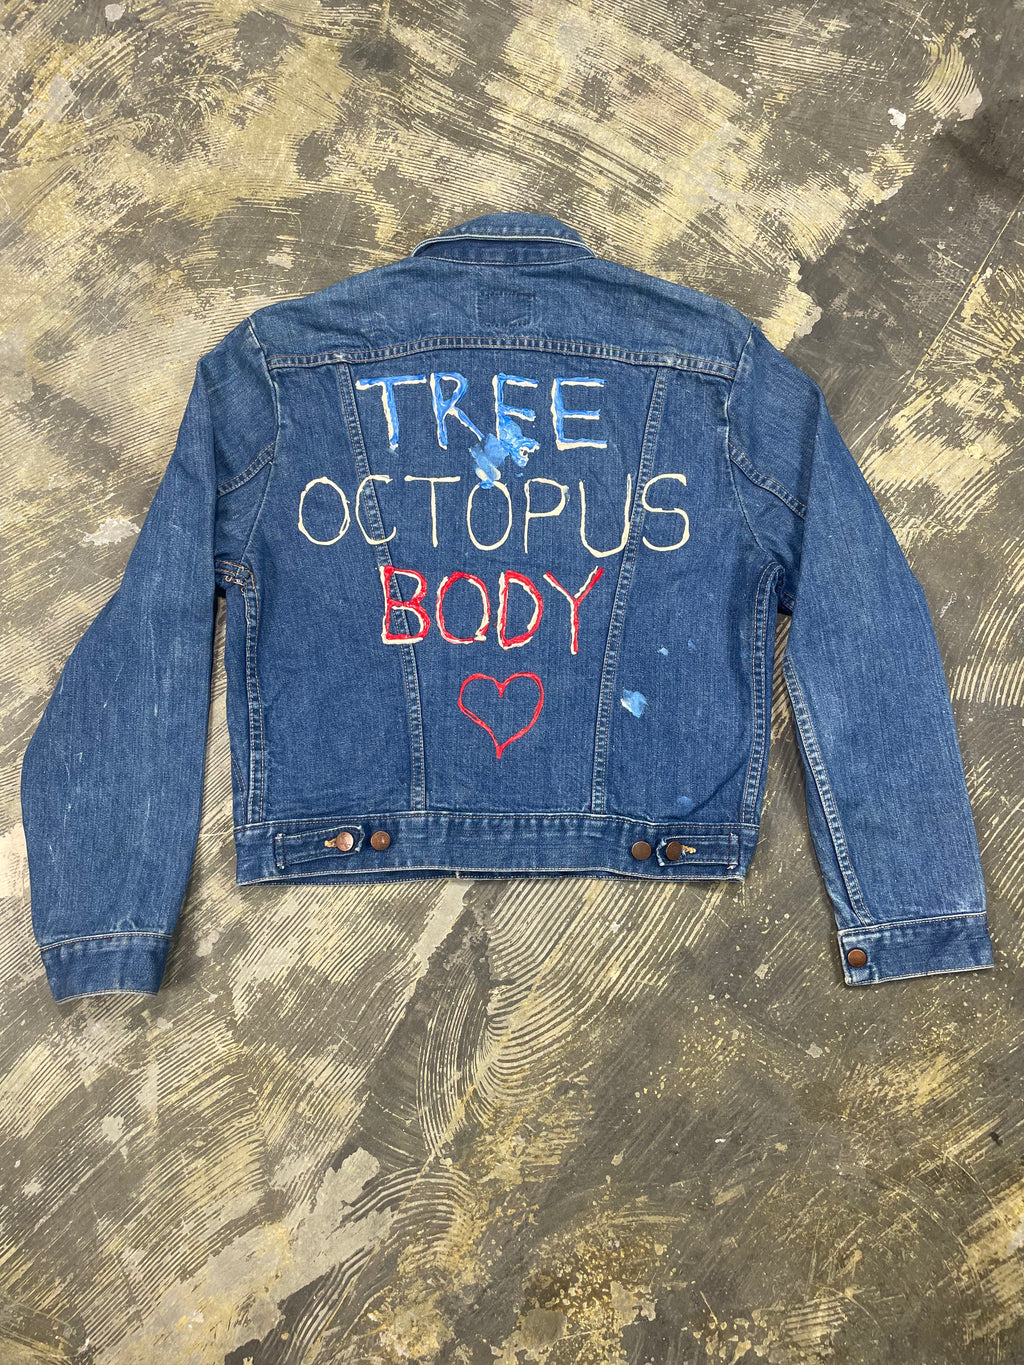 Vintage 1980's Wrangler "Tree Octopus Body" Denim Jacket (JYJ-184)